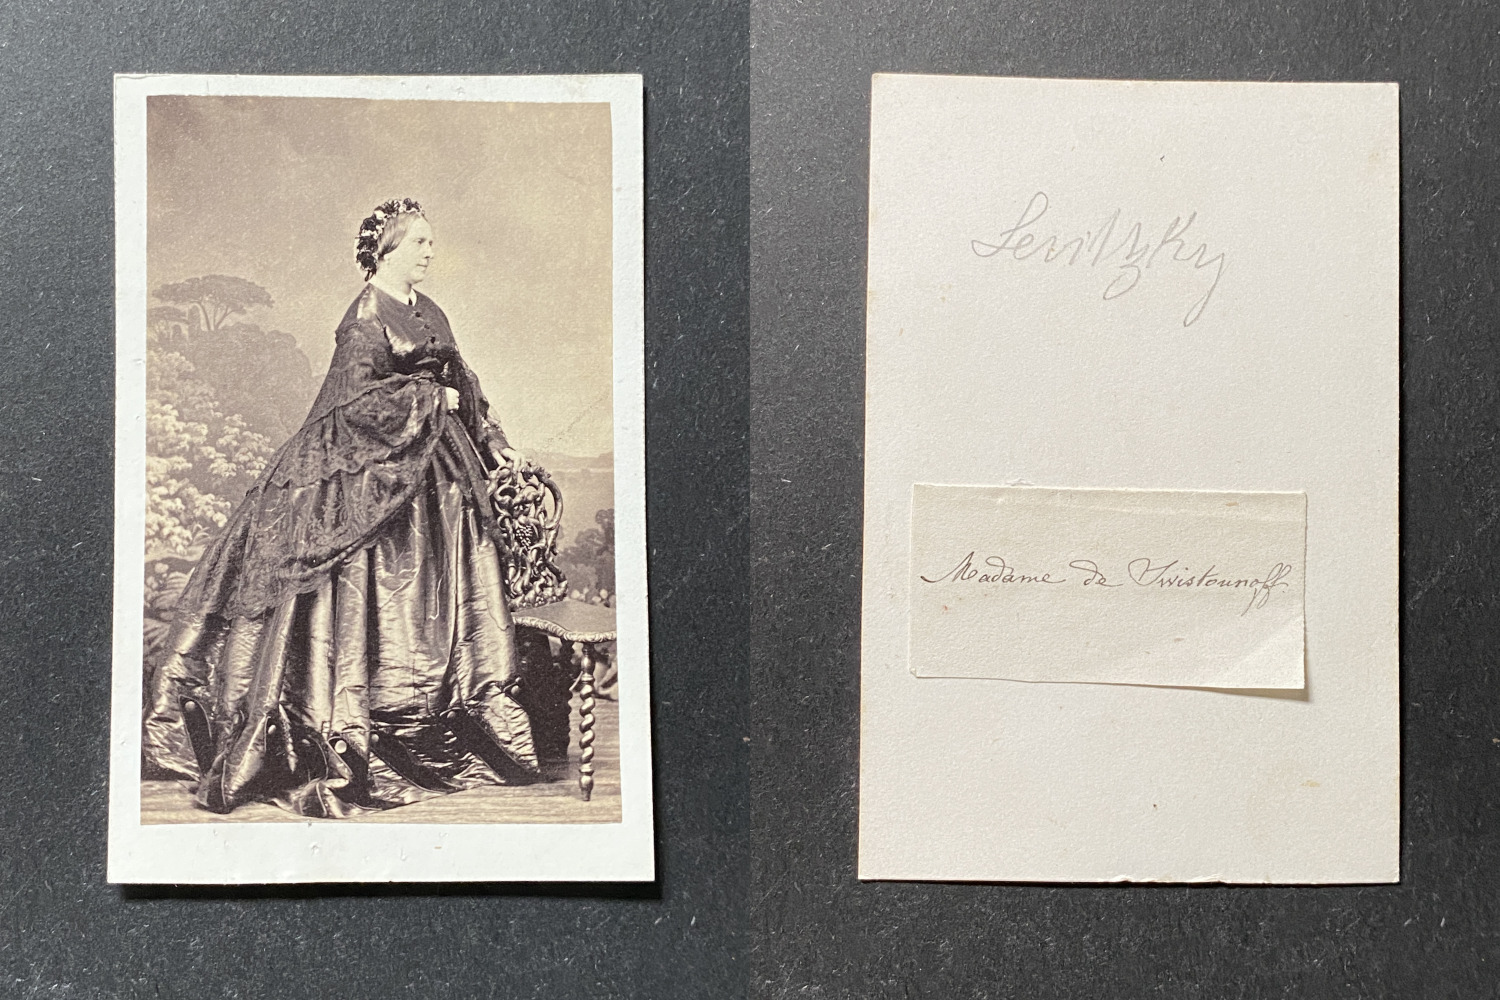 Levitsky, Madame de Swistounoff, circa 1860 vintage cdv albumen print - Monsieur